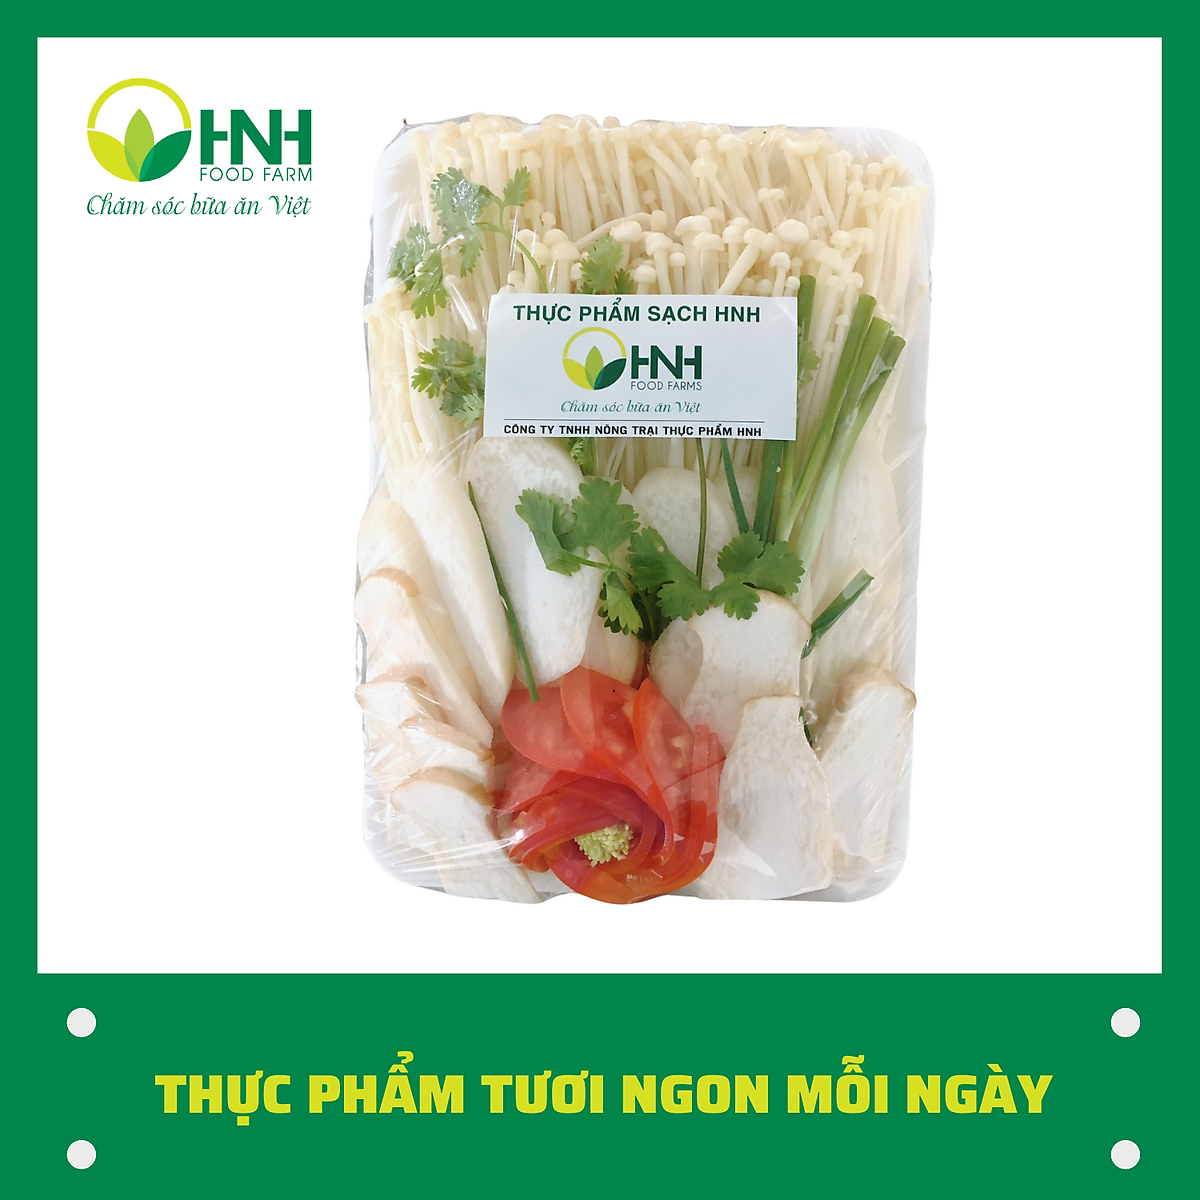 [CHỈ GIAO HÀ NỘI] READY TO COOK 03 set Canh nấm - HNH Food Farm